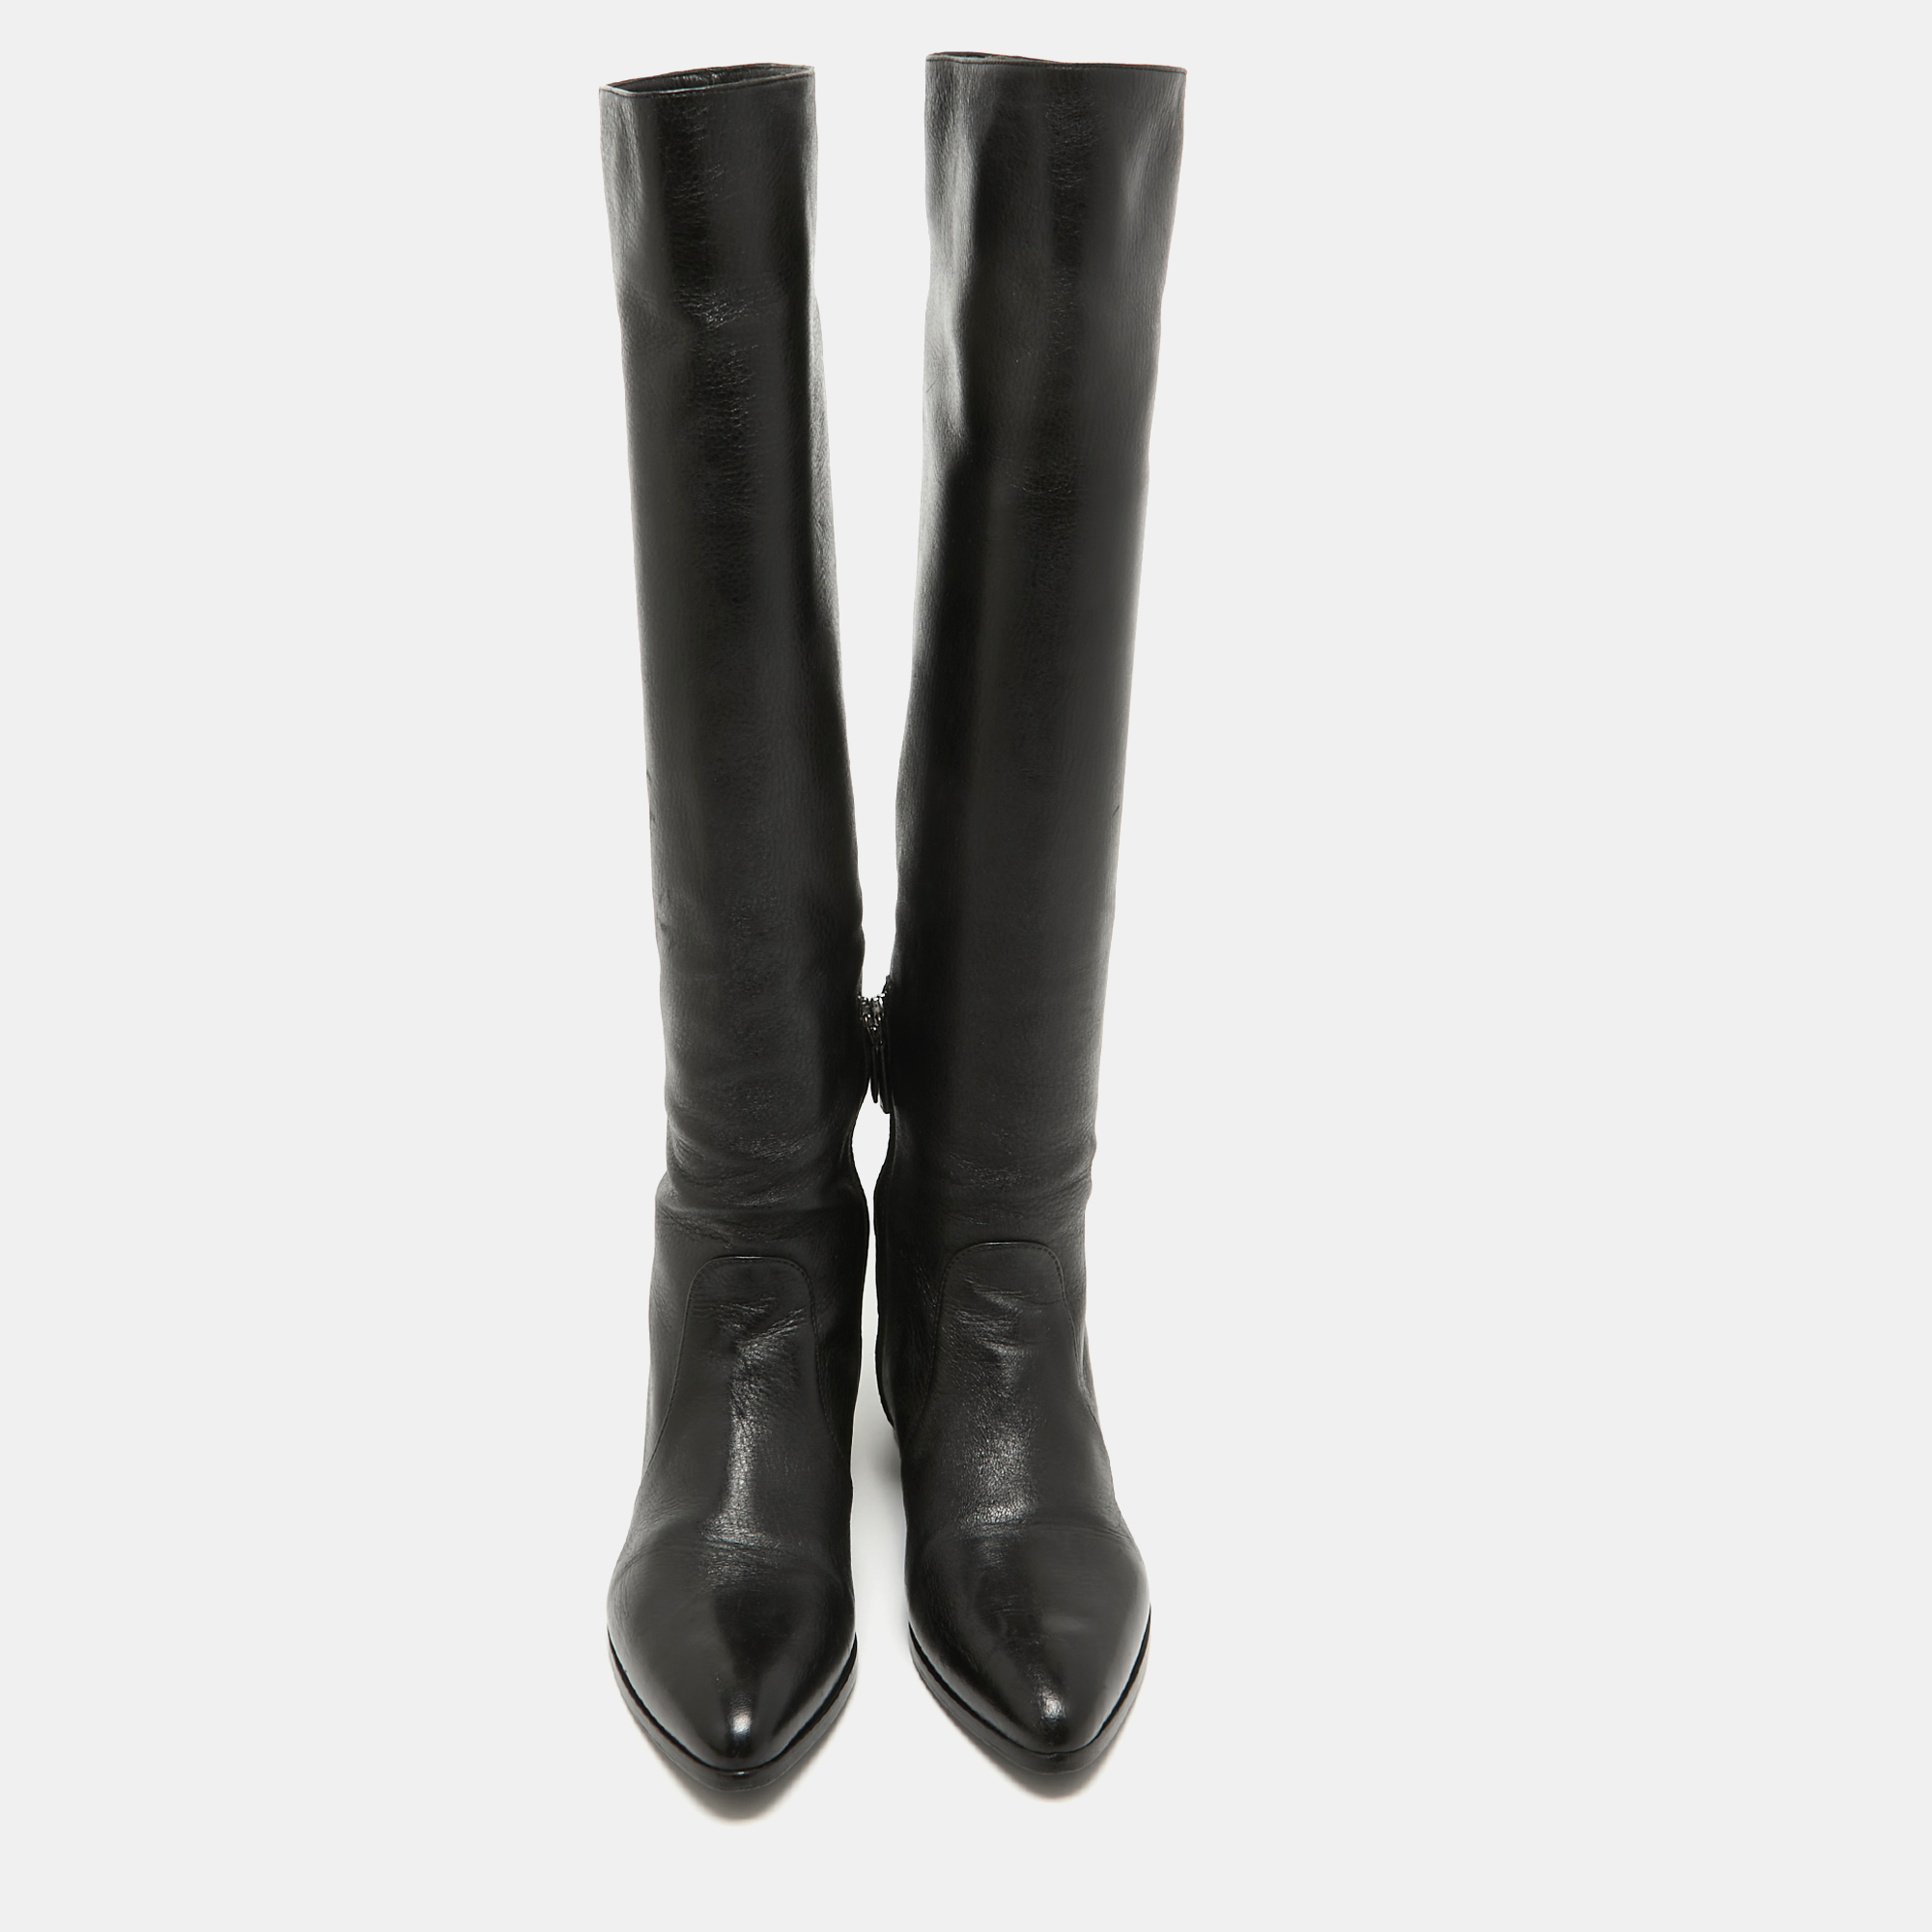 Prada Black Leather Knee High Block Heel Boots Size 36